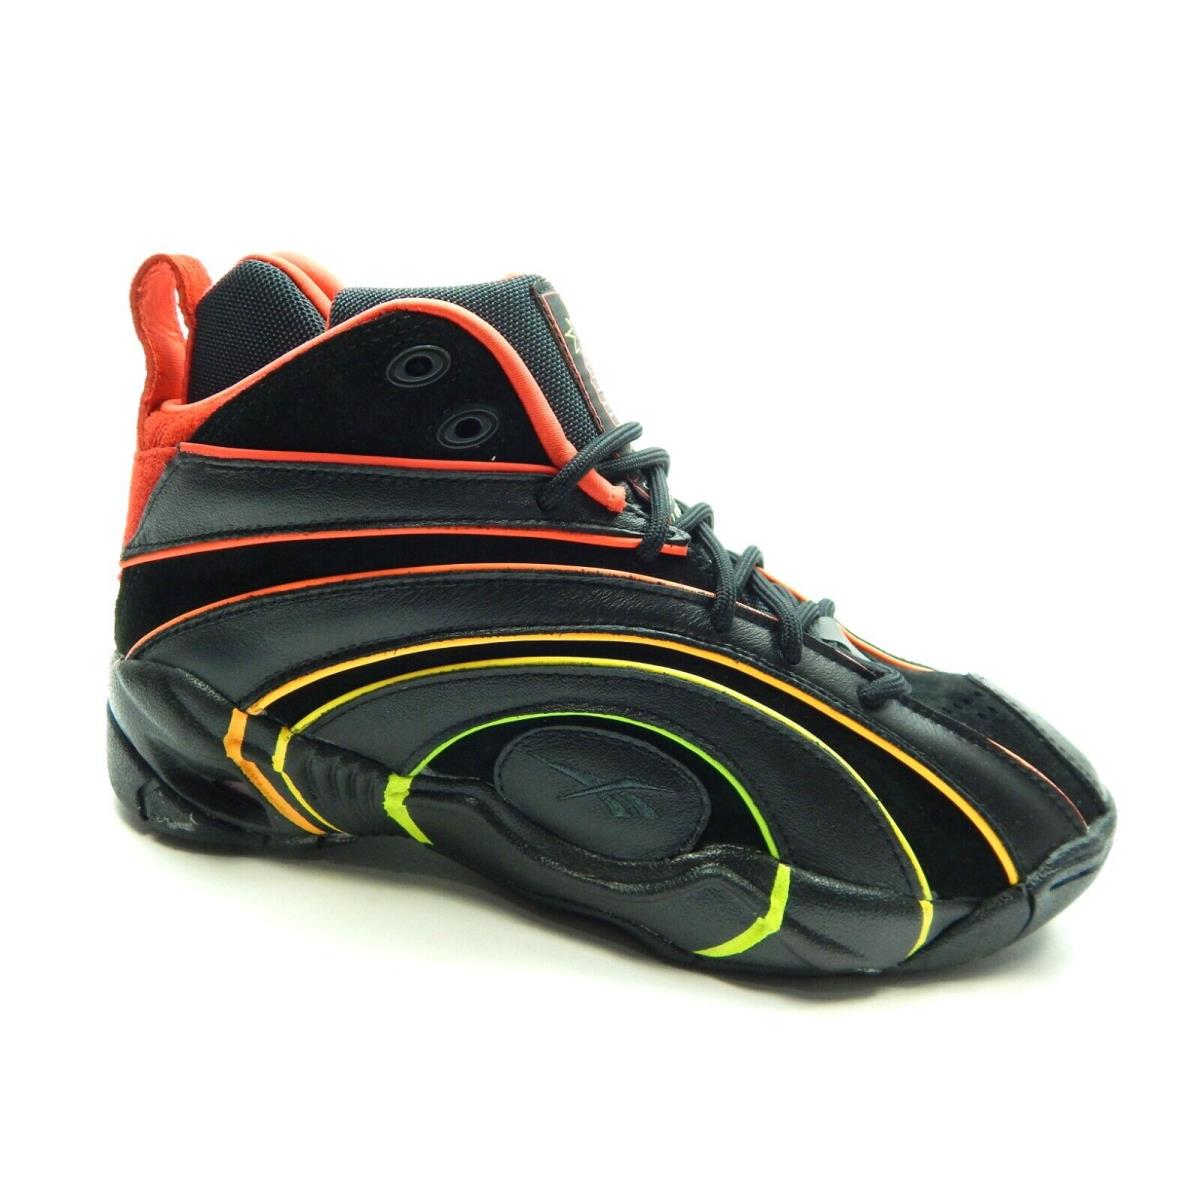 Reebok Men`s Shaqnosis Basketball H68851 Black Red Shoes Size 9.5 - Red